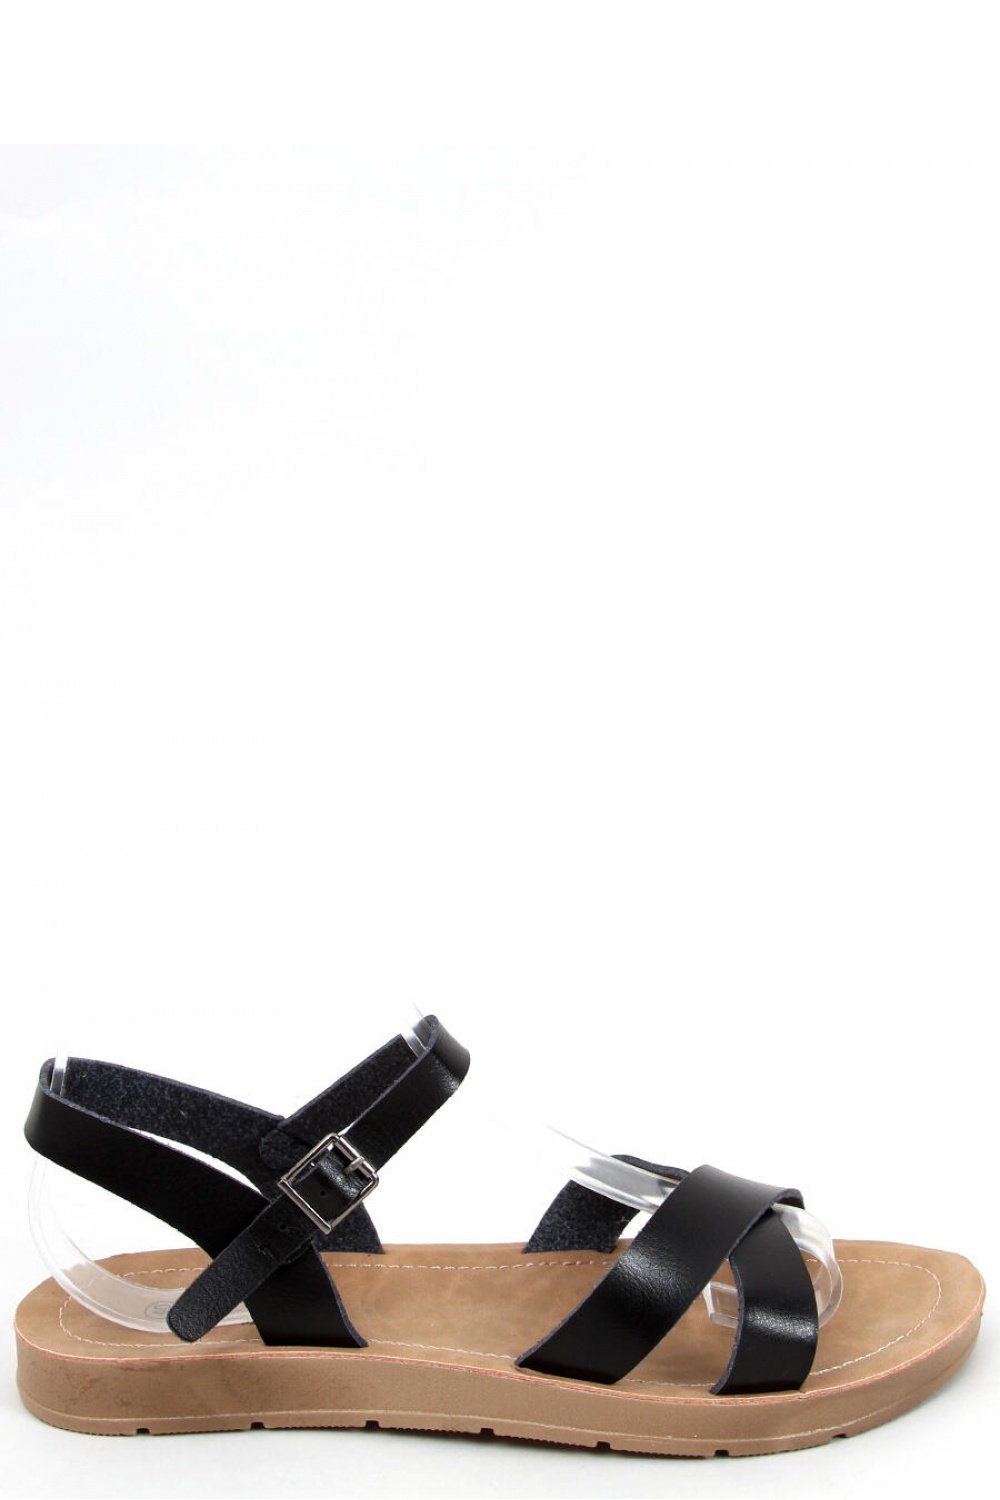 Sandals model 166568 Inello Posh Styles Apparel